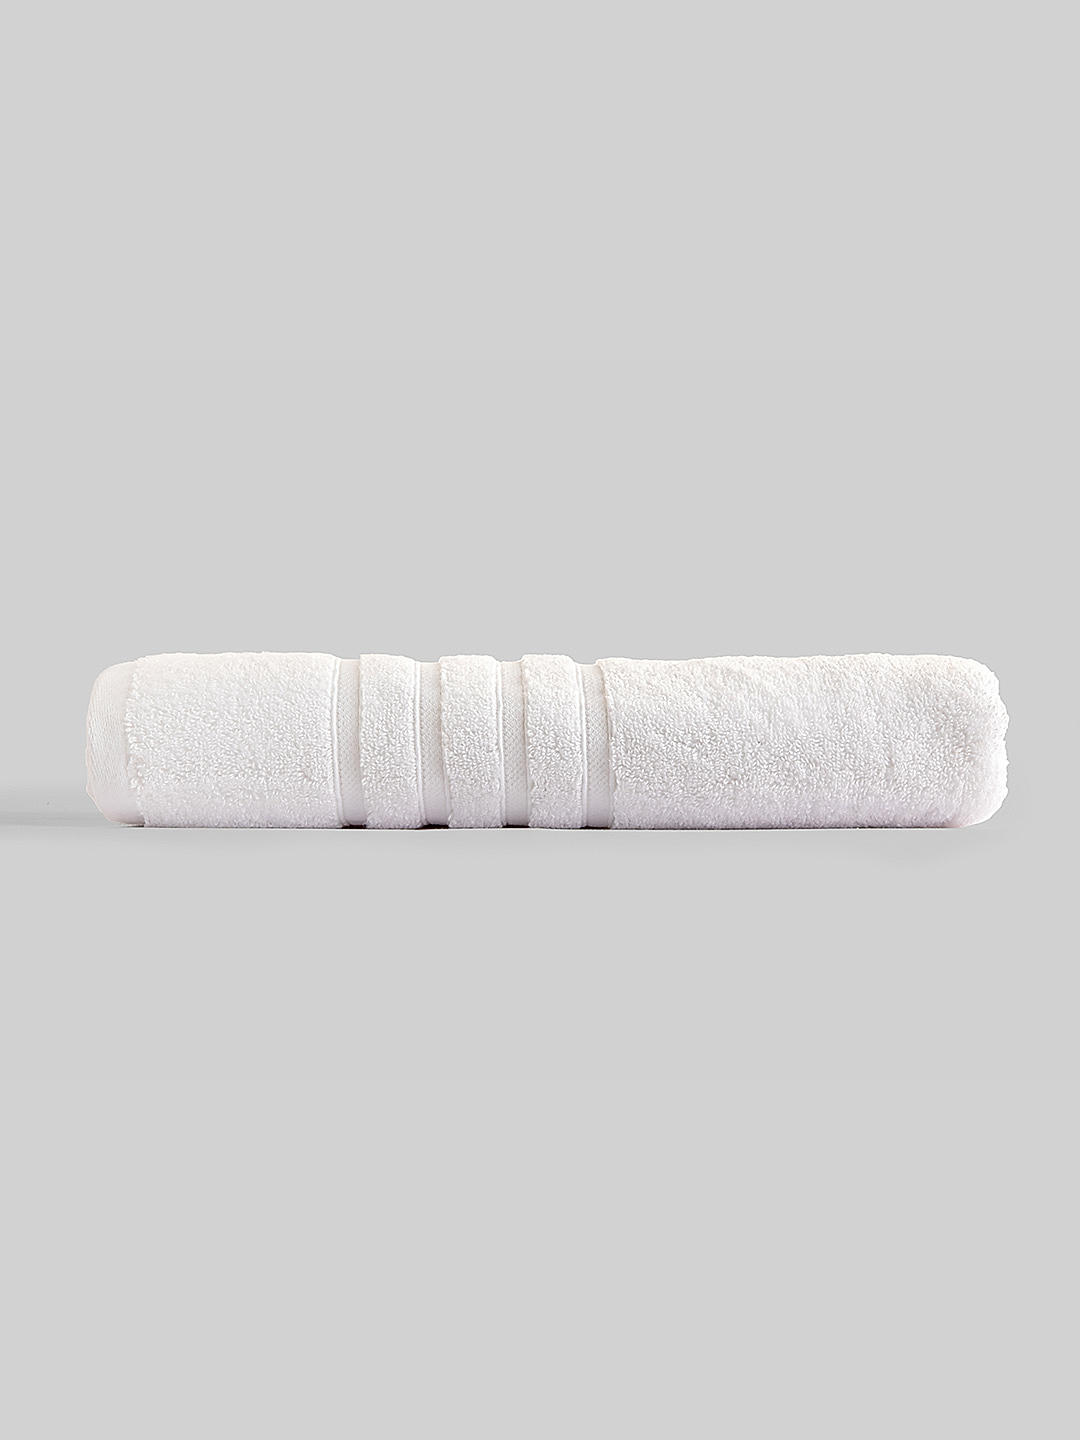 Kalpavriksha 550 gsm 100% Organic Cotton Soft & Fluffy White Colored Bath Towel